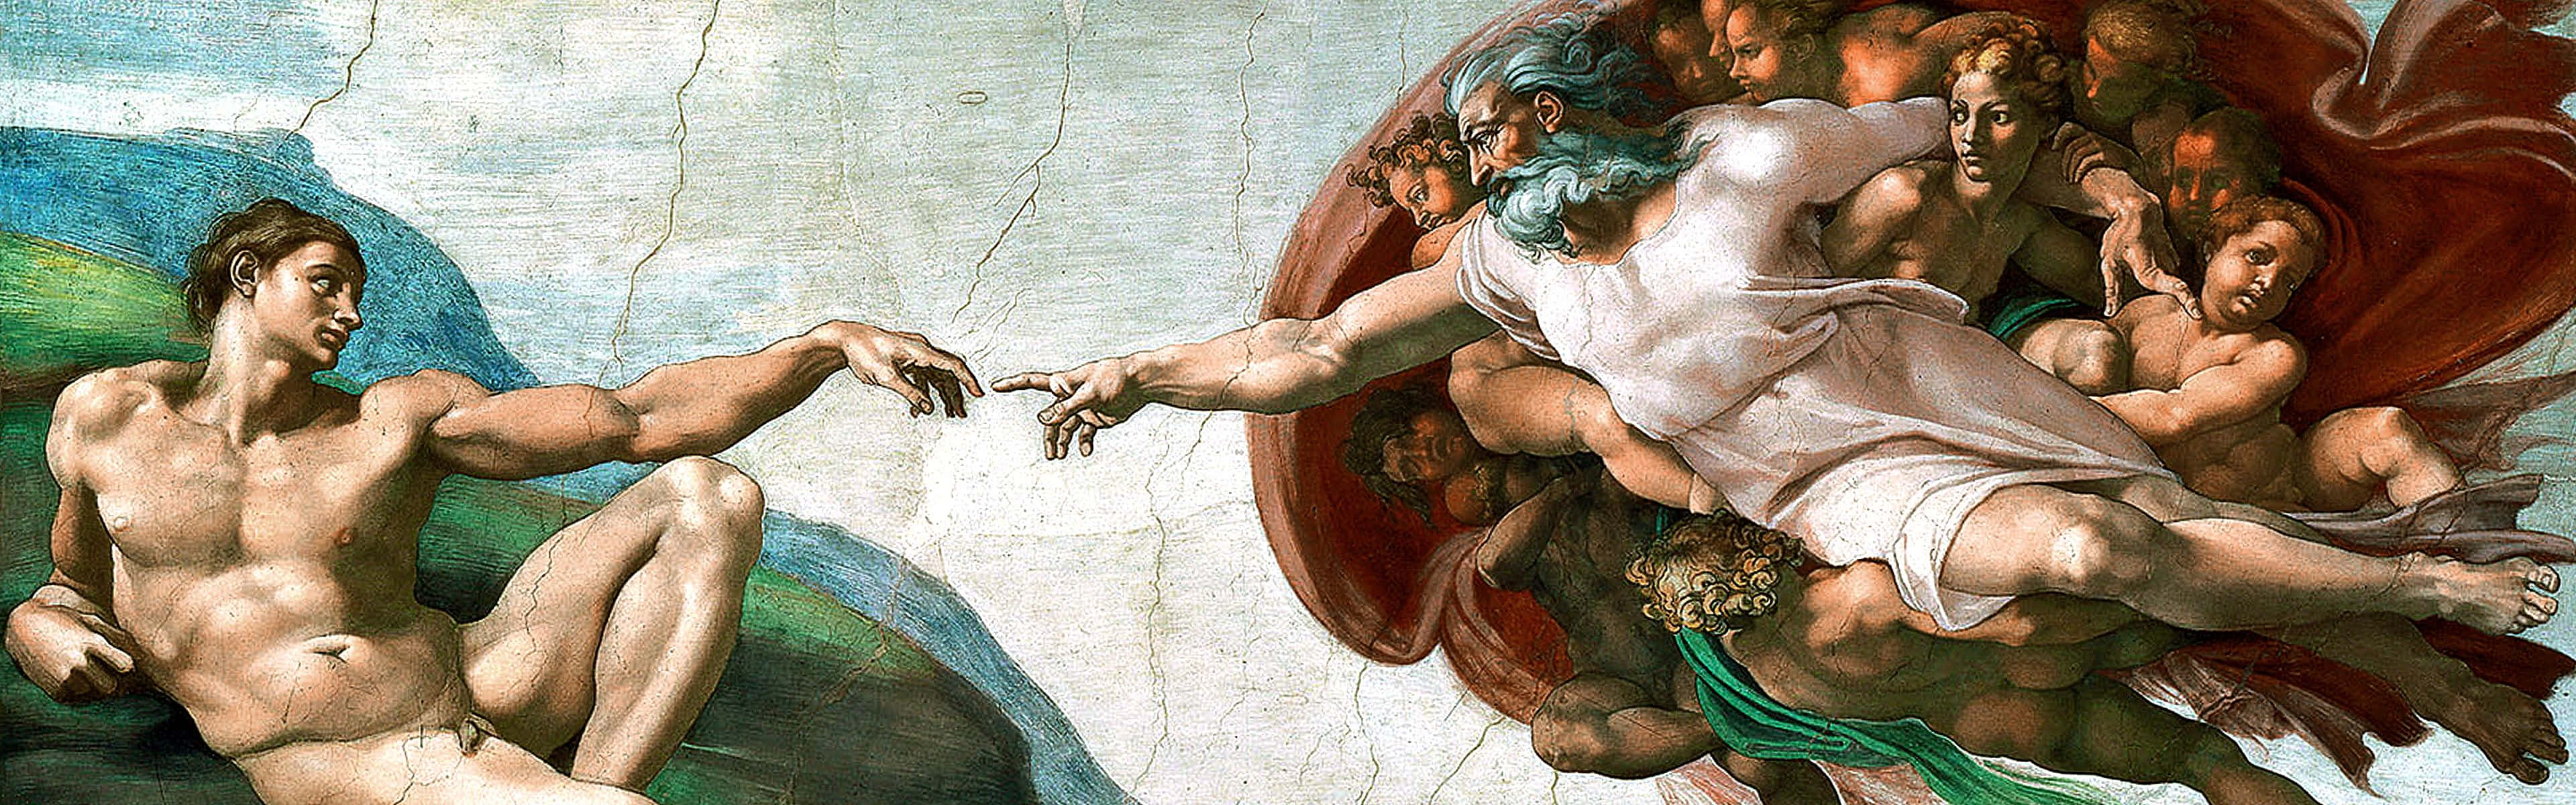 Michelangelo Painting The Creation Of Adam Wallpaper